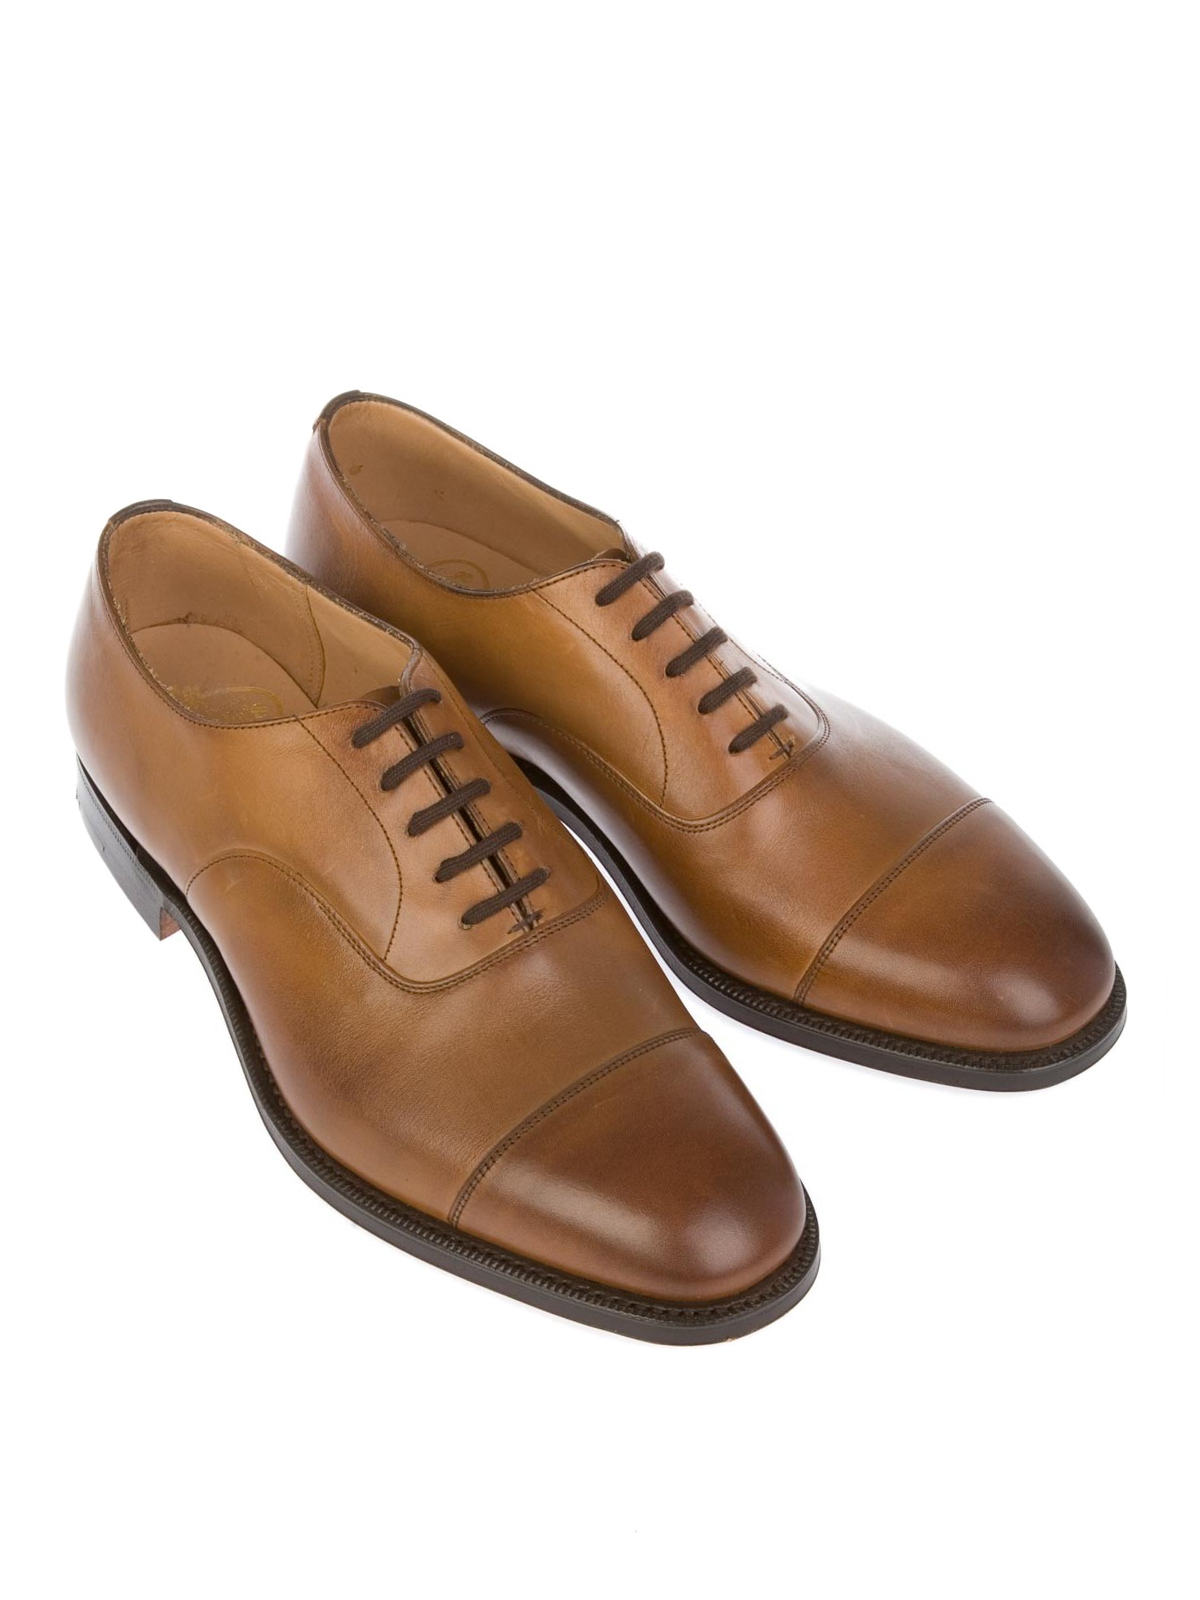 70s Church's Consul Classic Oxford Shoes - ドレス/ビジネス